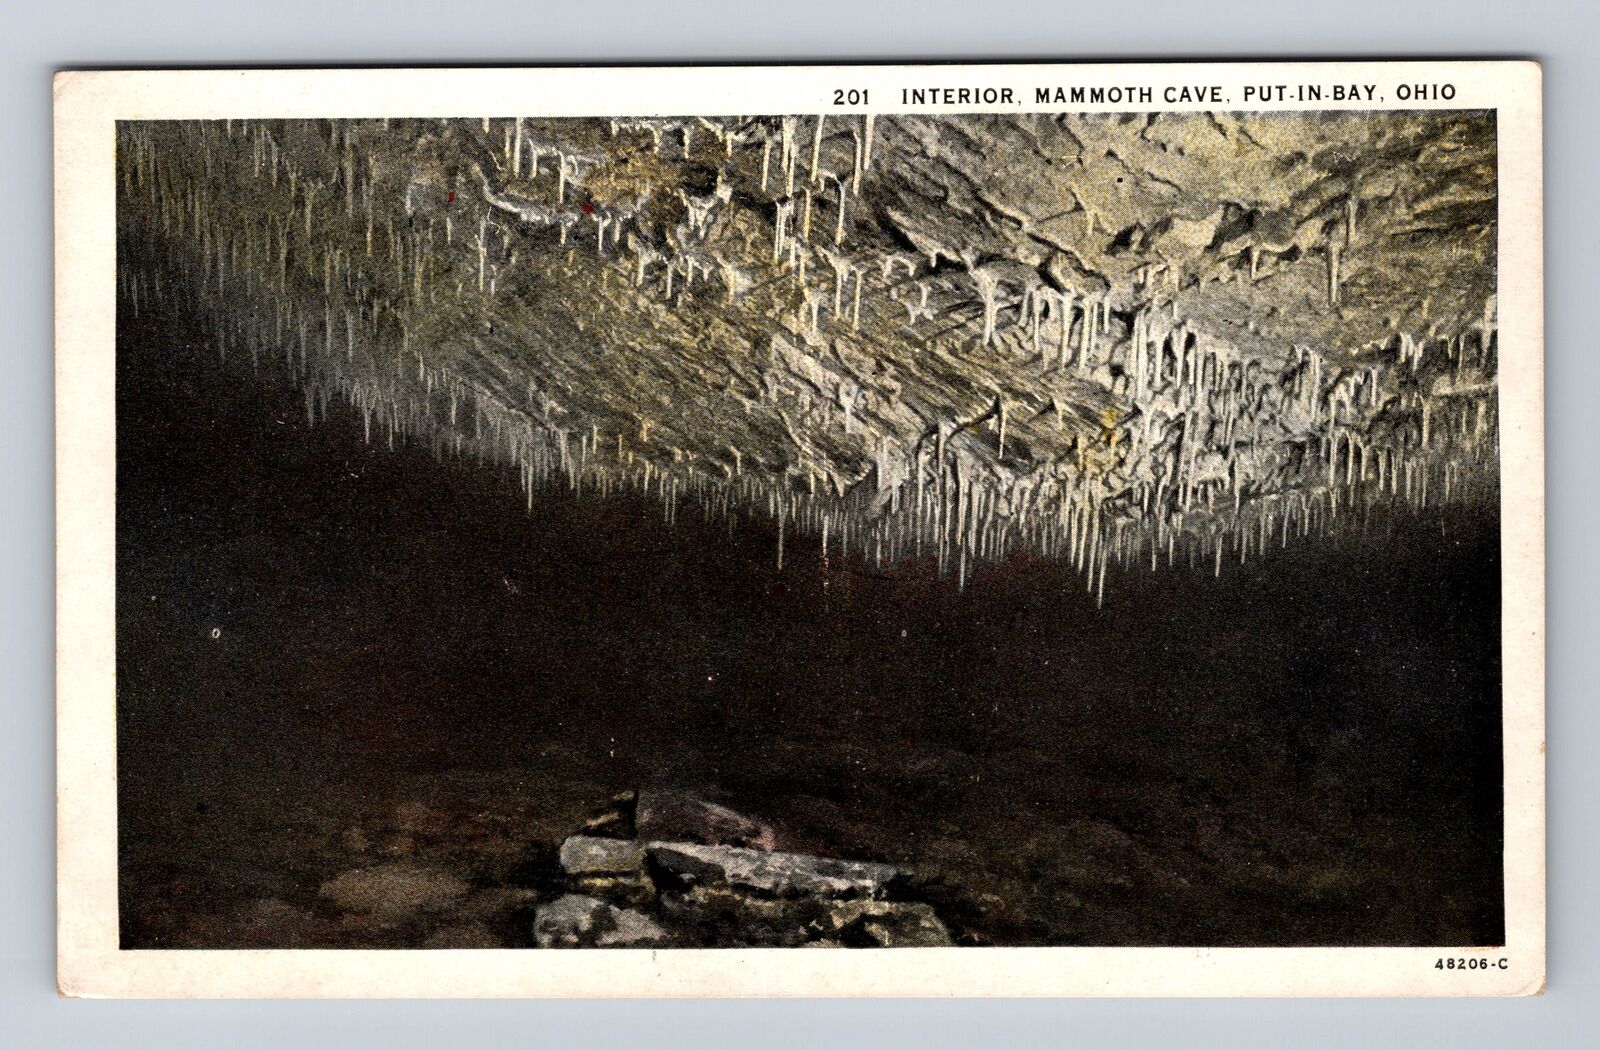 Put-In-Bay OH-Ohio, Interior Mammoth Cave, Antique Souvenir Vintage Postcard